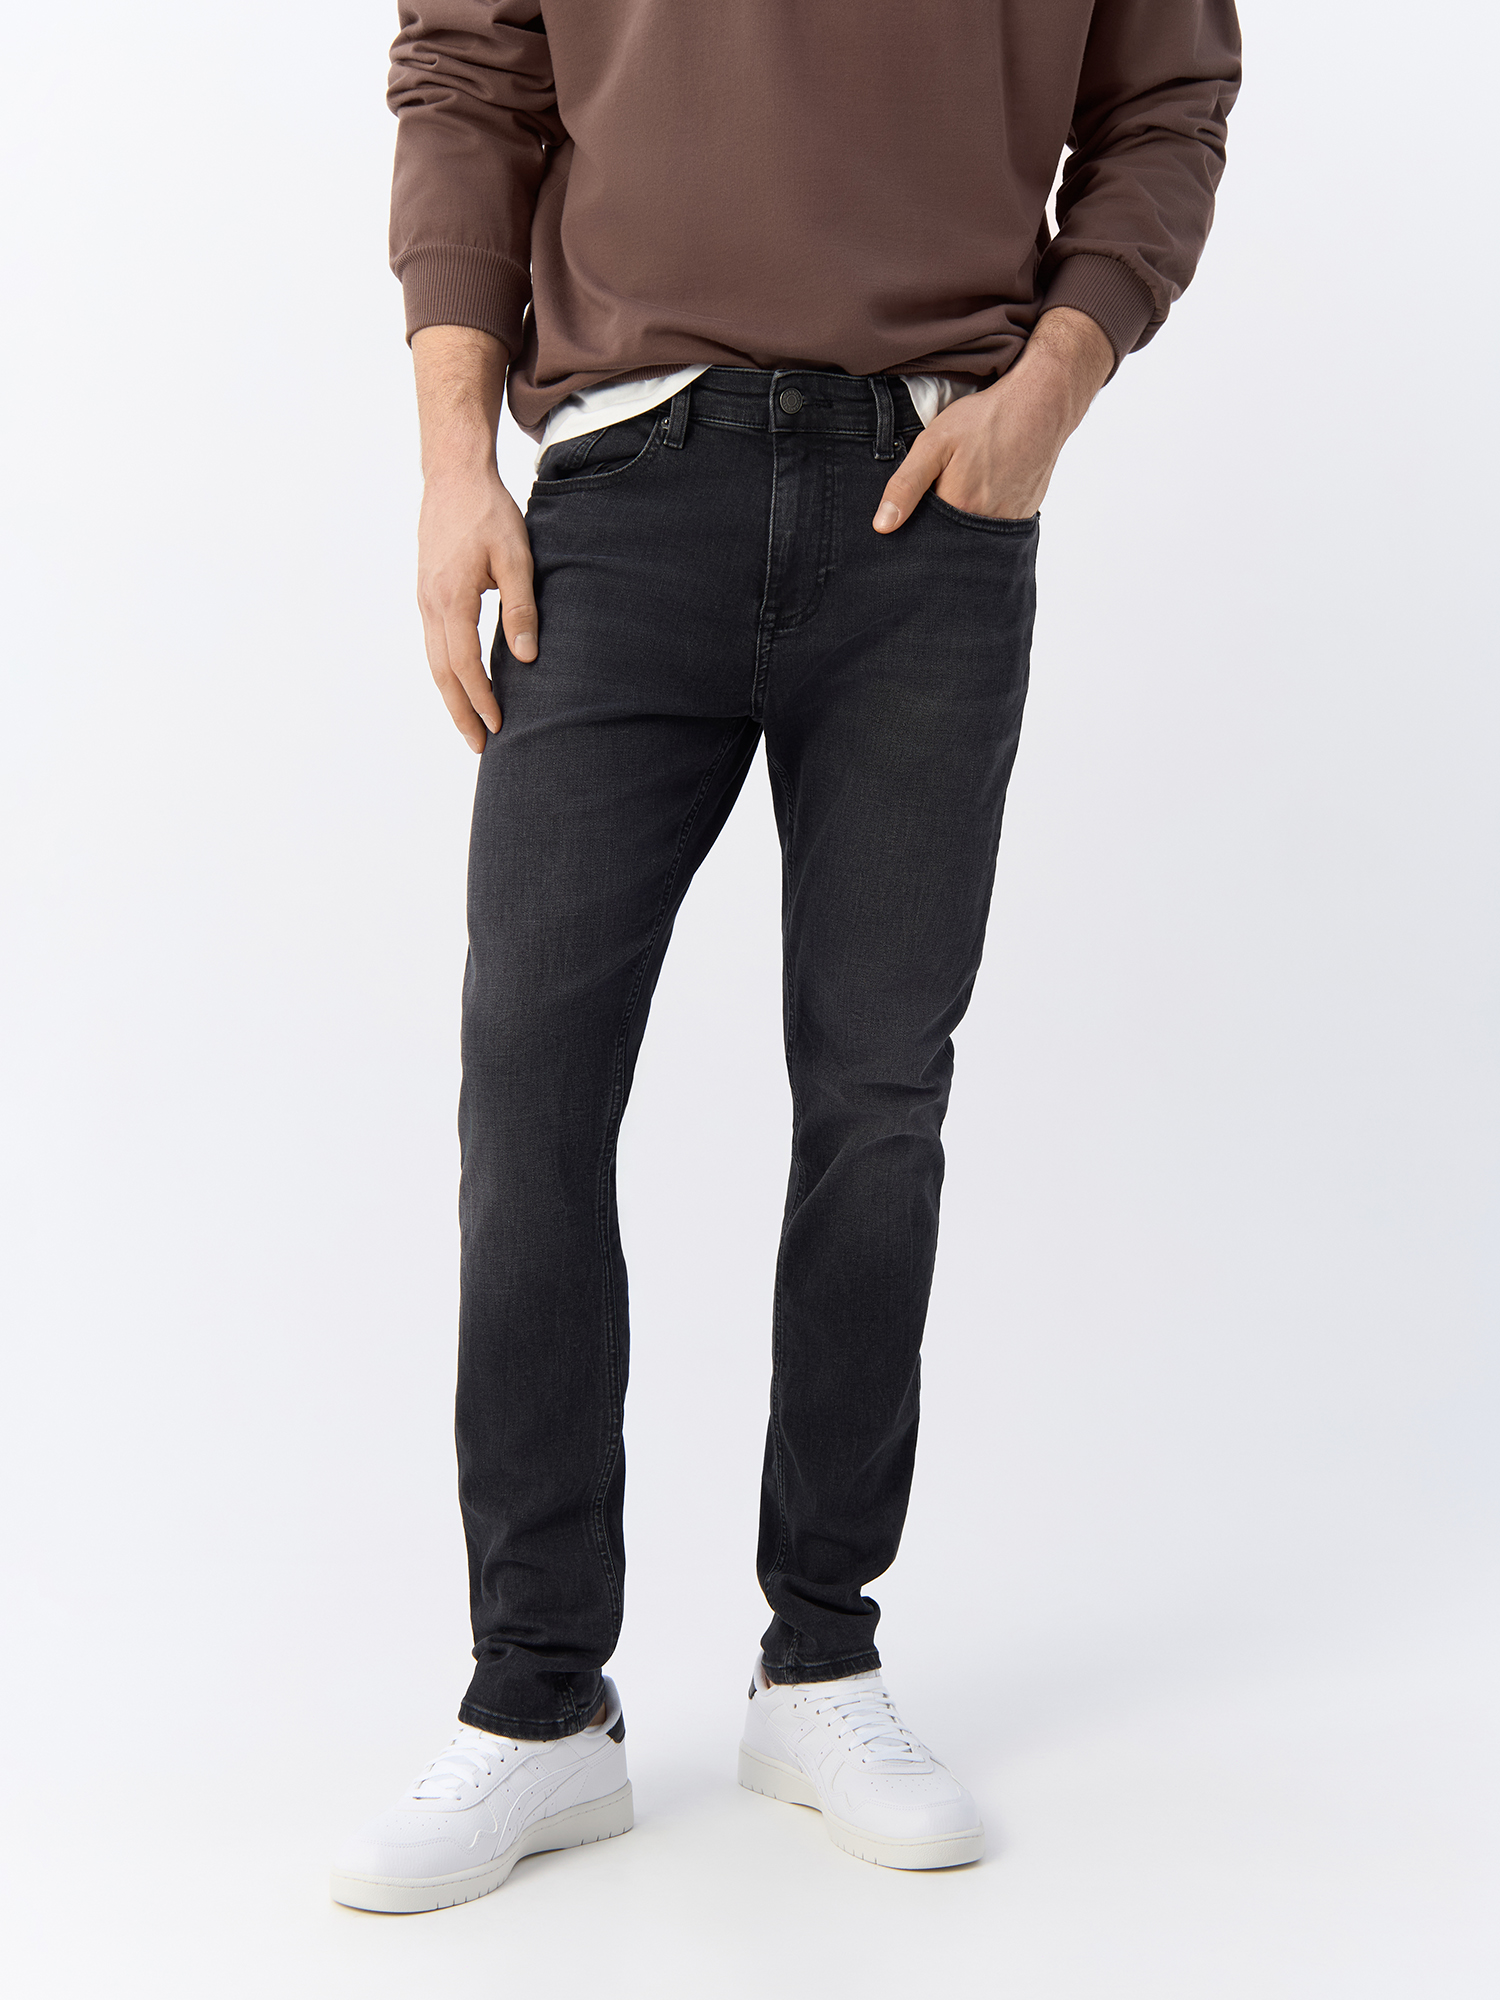 Джинсы Tommy Hilfiger Jeans мужские, чёрный-1BZ, 34-32, DM0DM18145